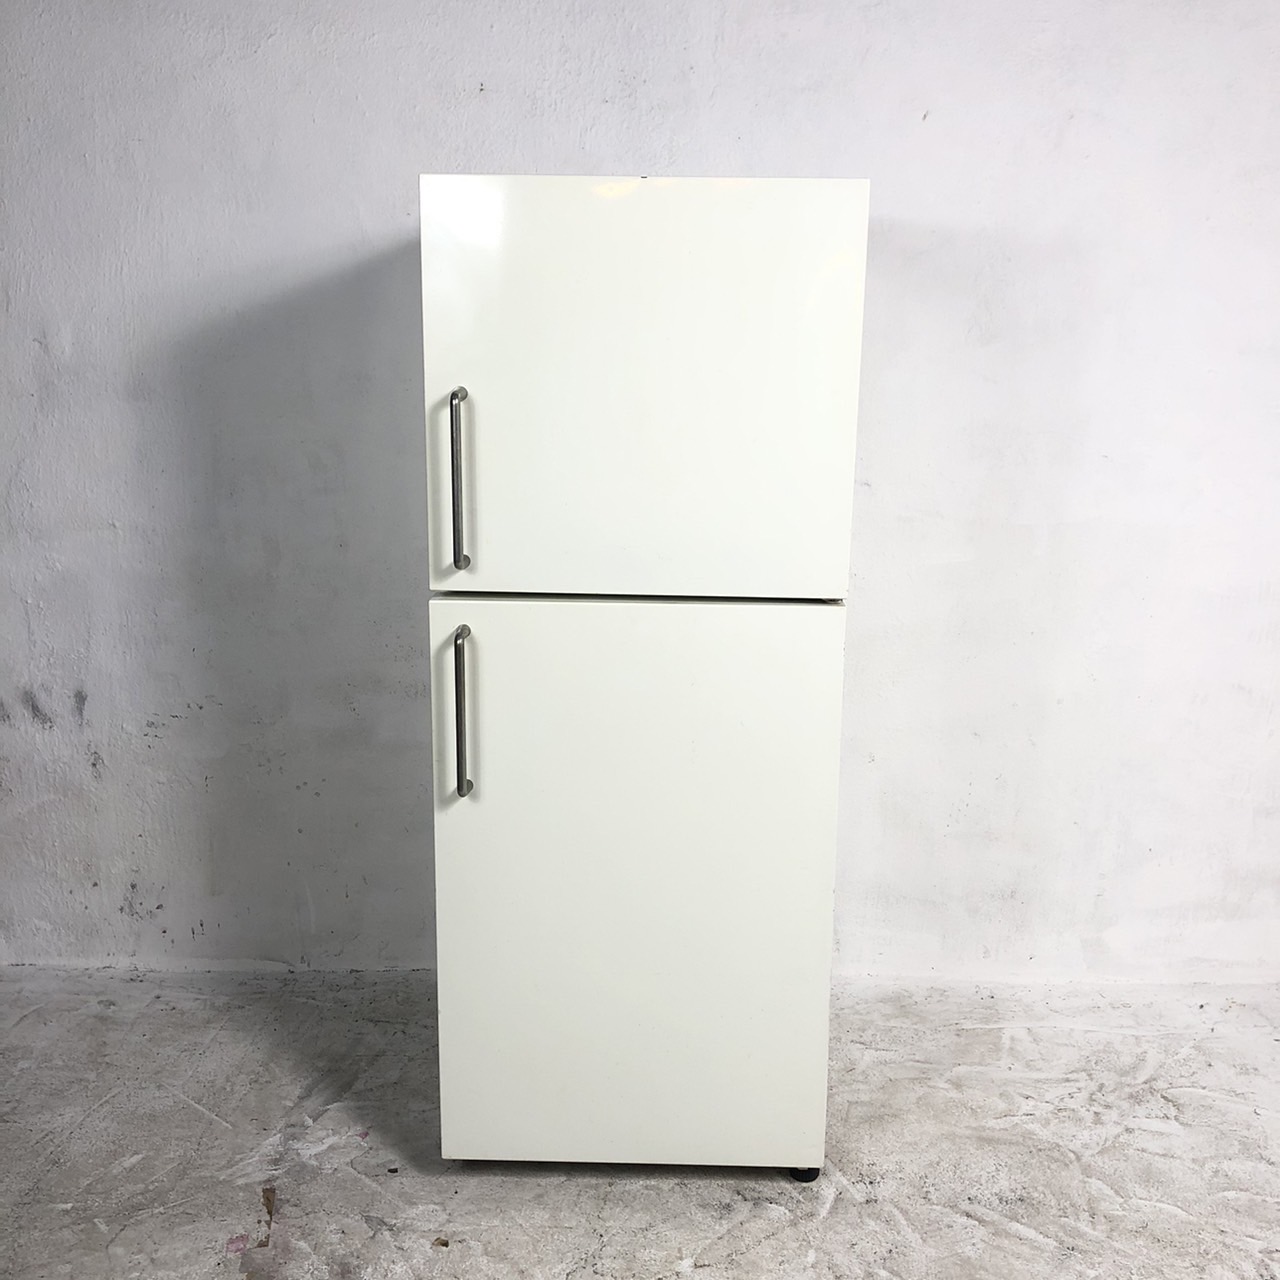 無印良品 冷蔵庫 137L M-R14D